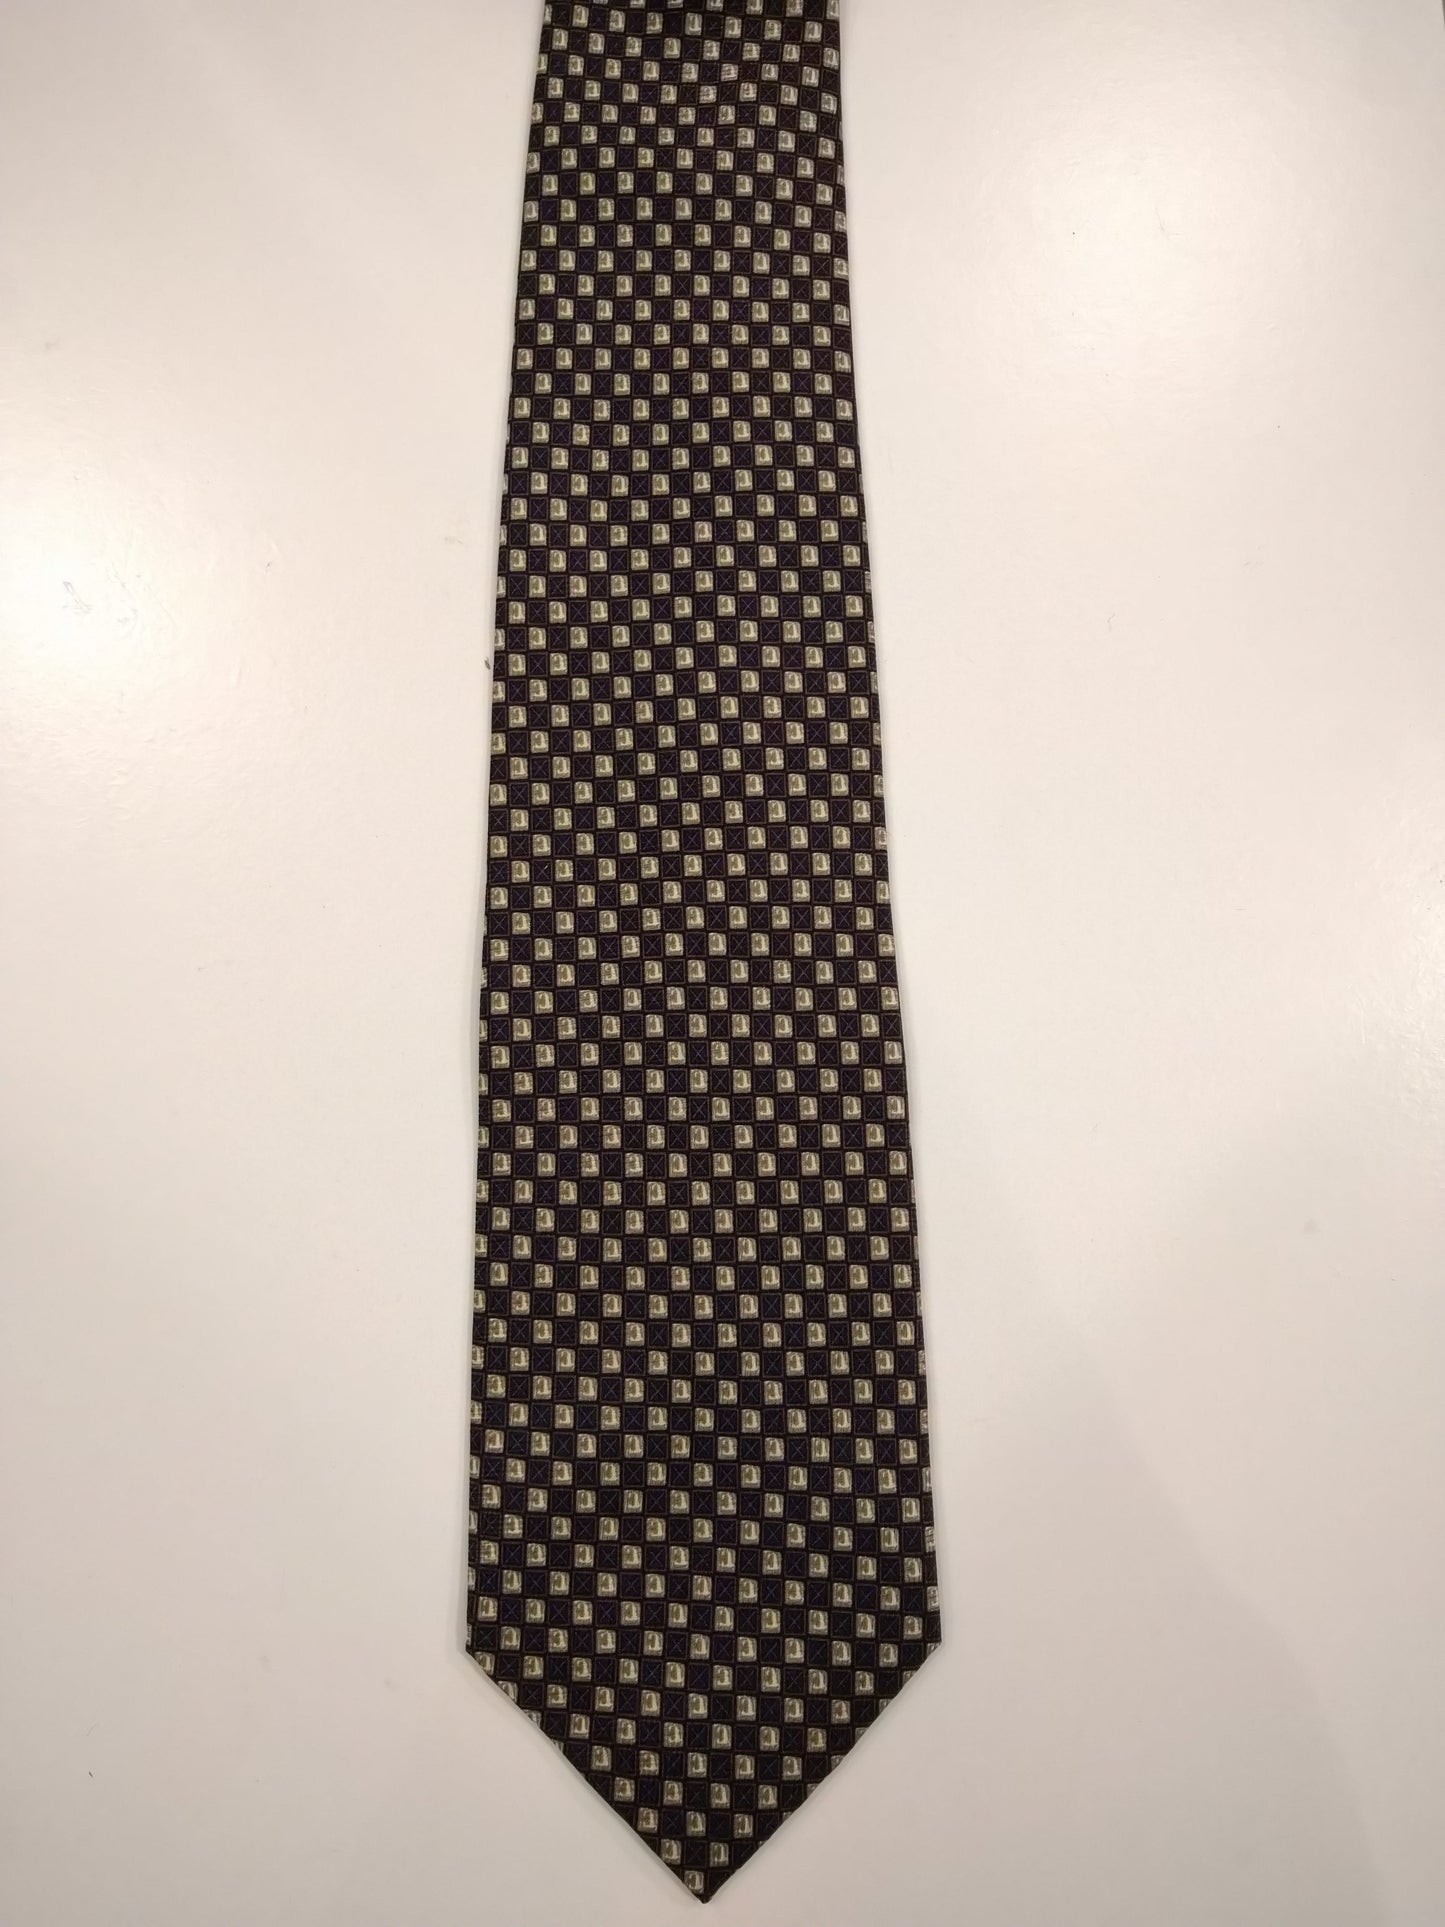 La corbata lateral de Debenham. Motifa negra beige.